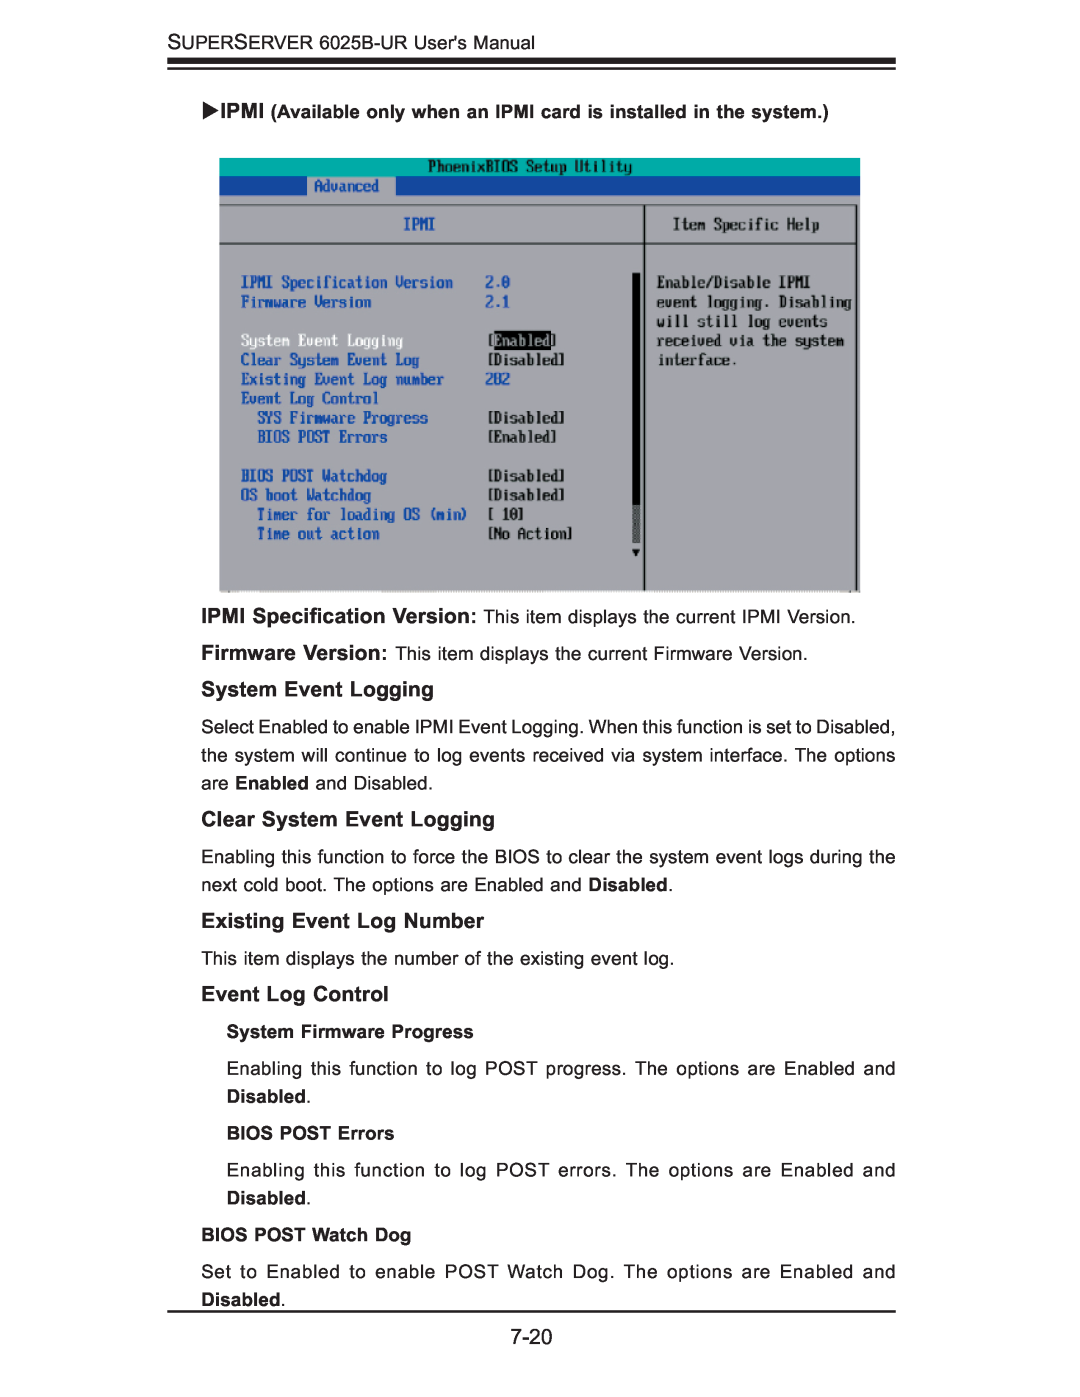 SUPER MICRO Computer 6025B-UR user manual Clear System Event Logging, Existing Event Log Number, Event Log Control 